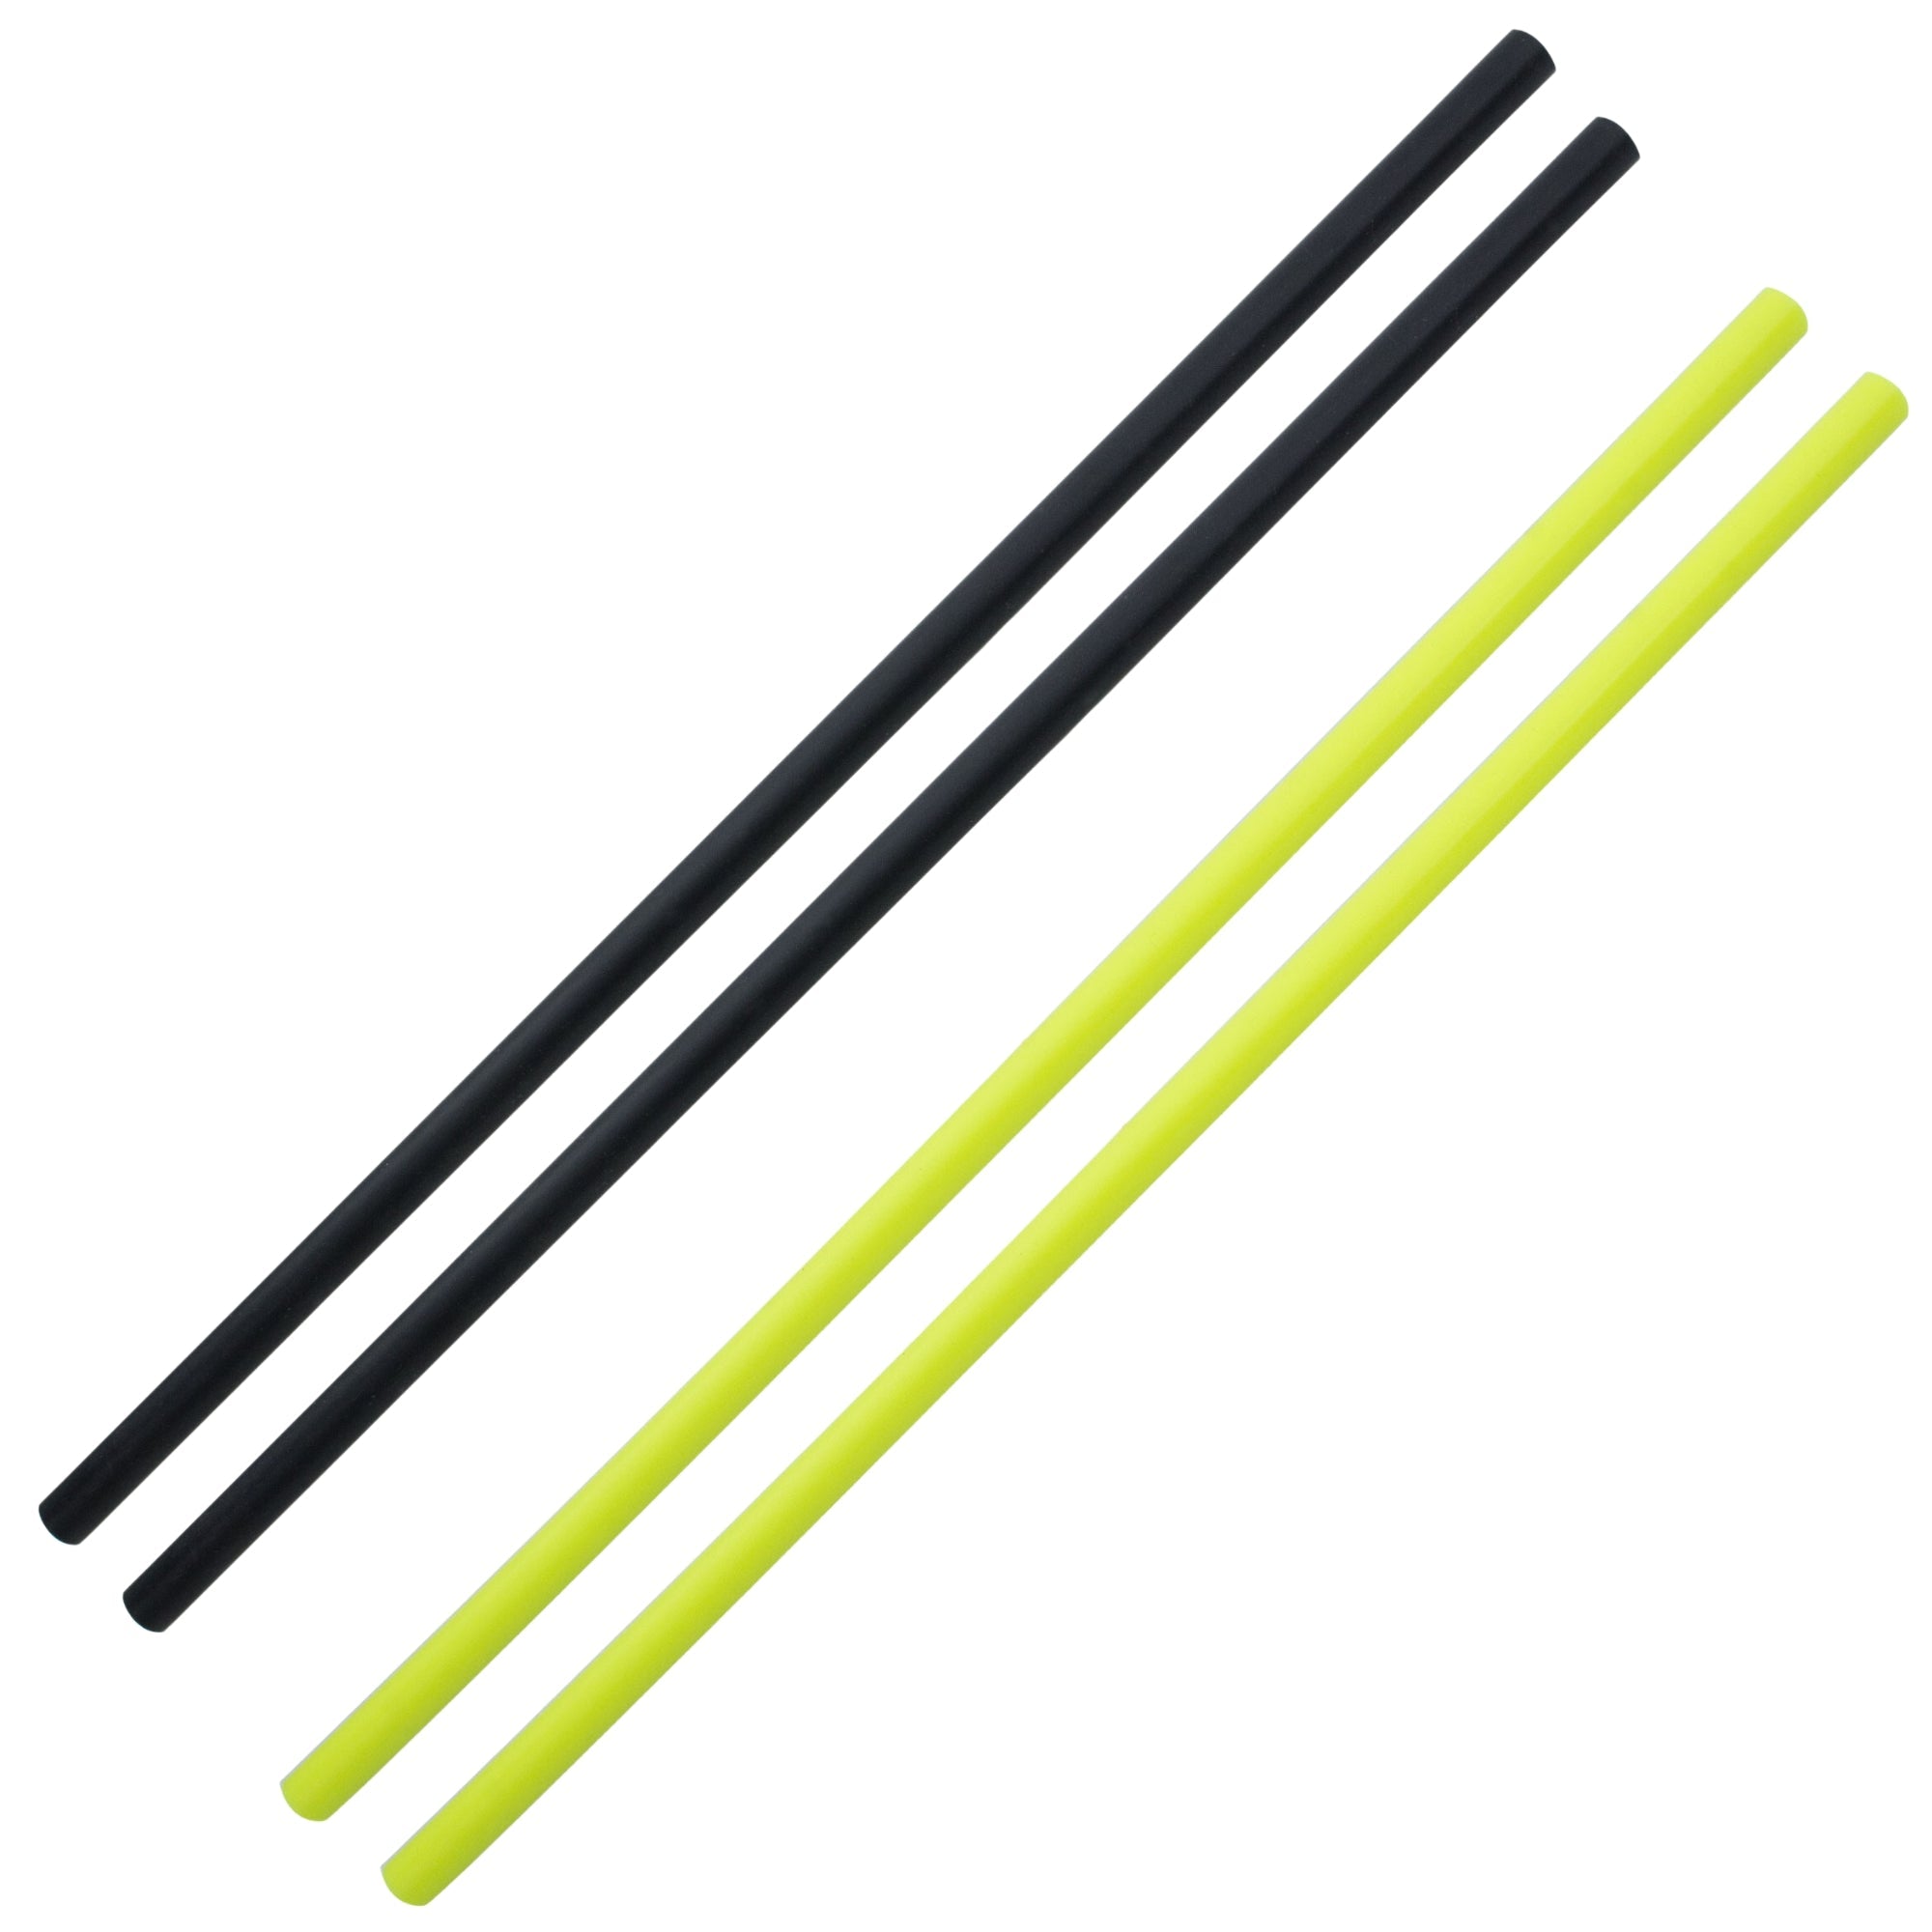 a pair of black hand sticks and yellow handsticks